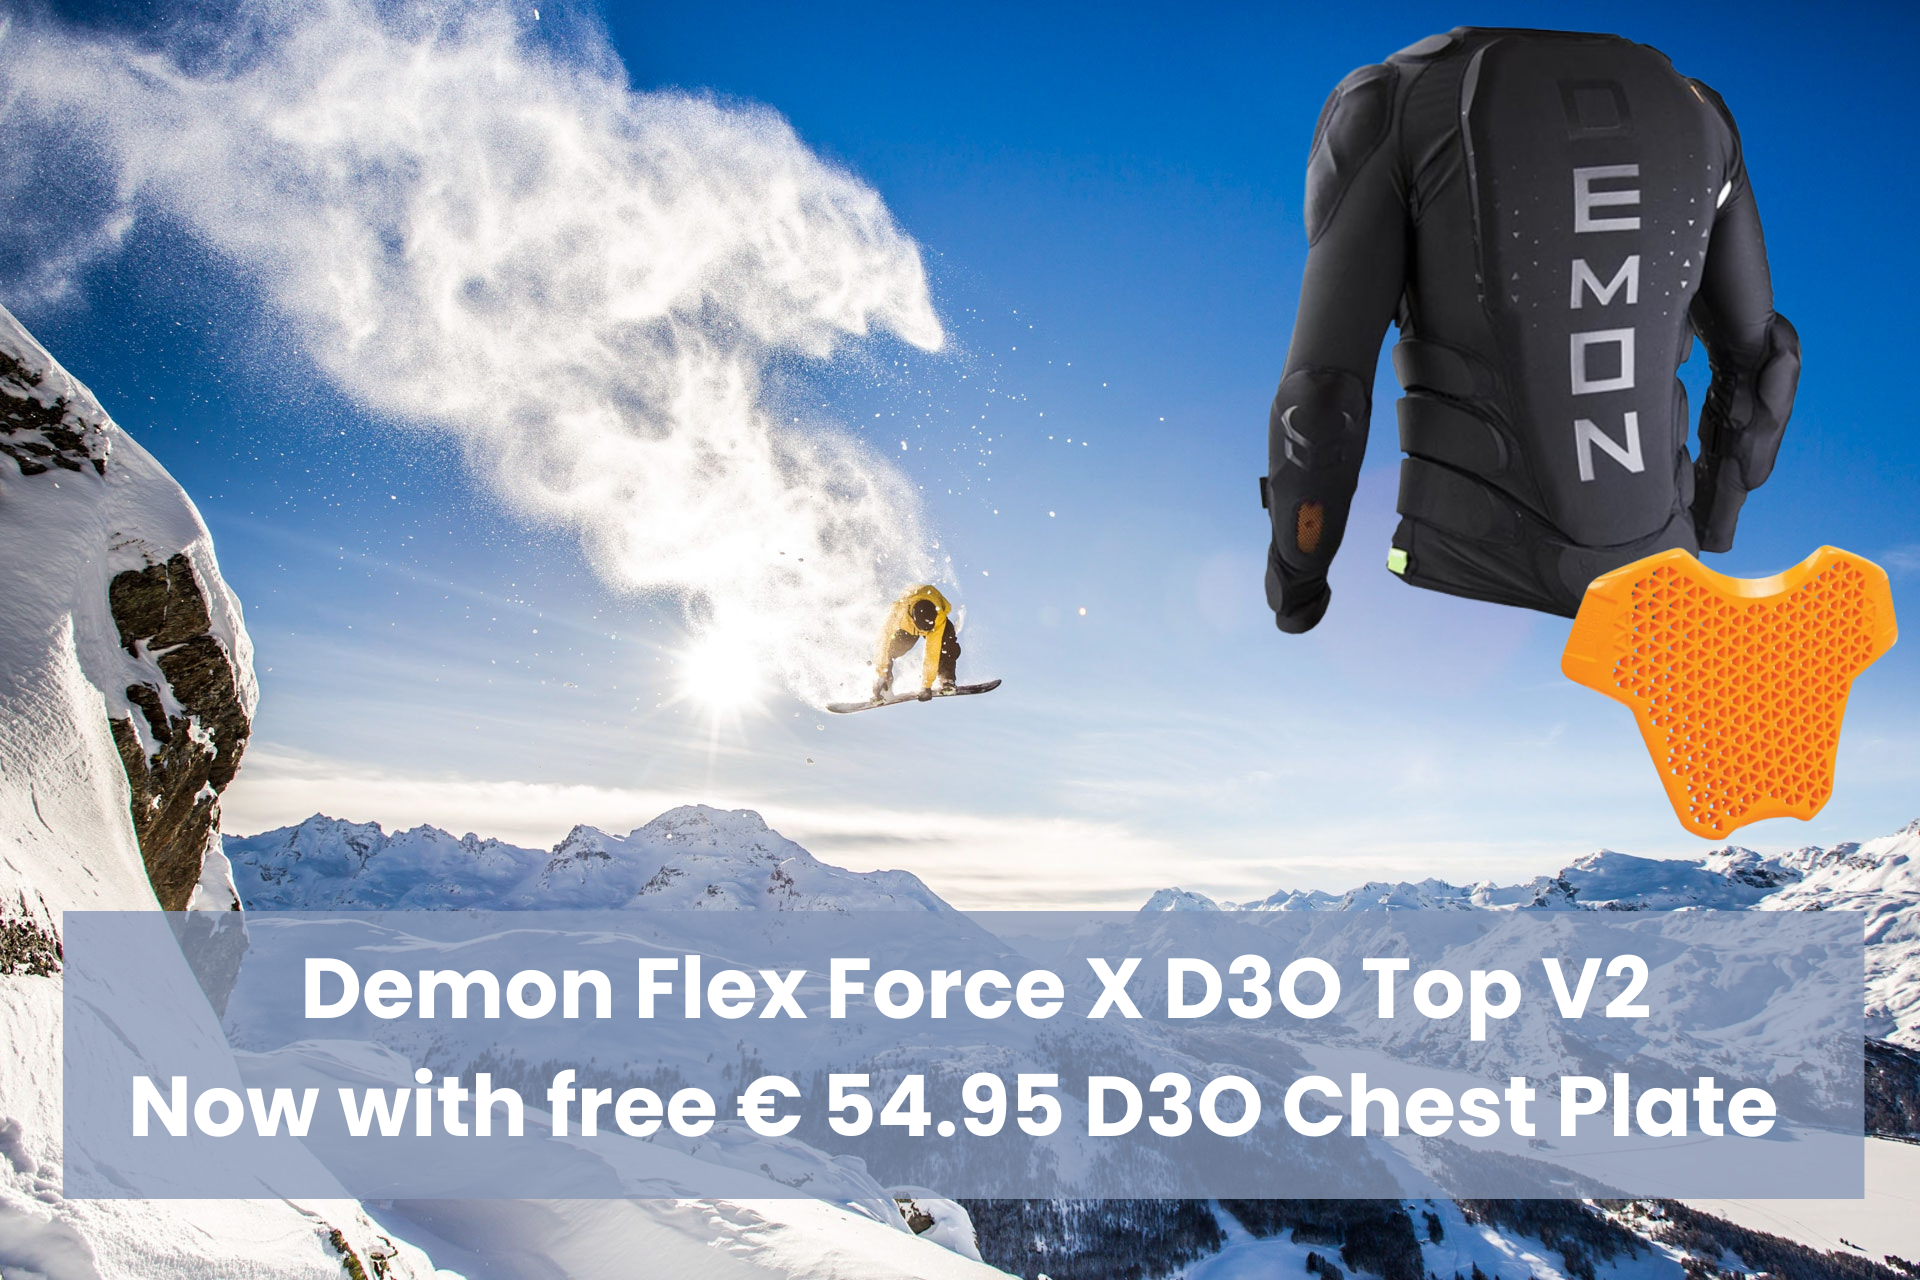 Demon Zero RF Short D3O short protection snowboard